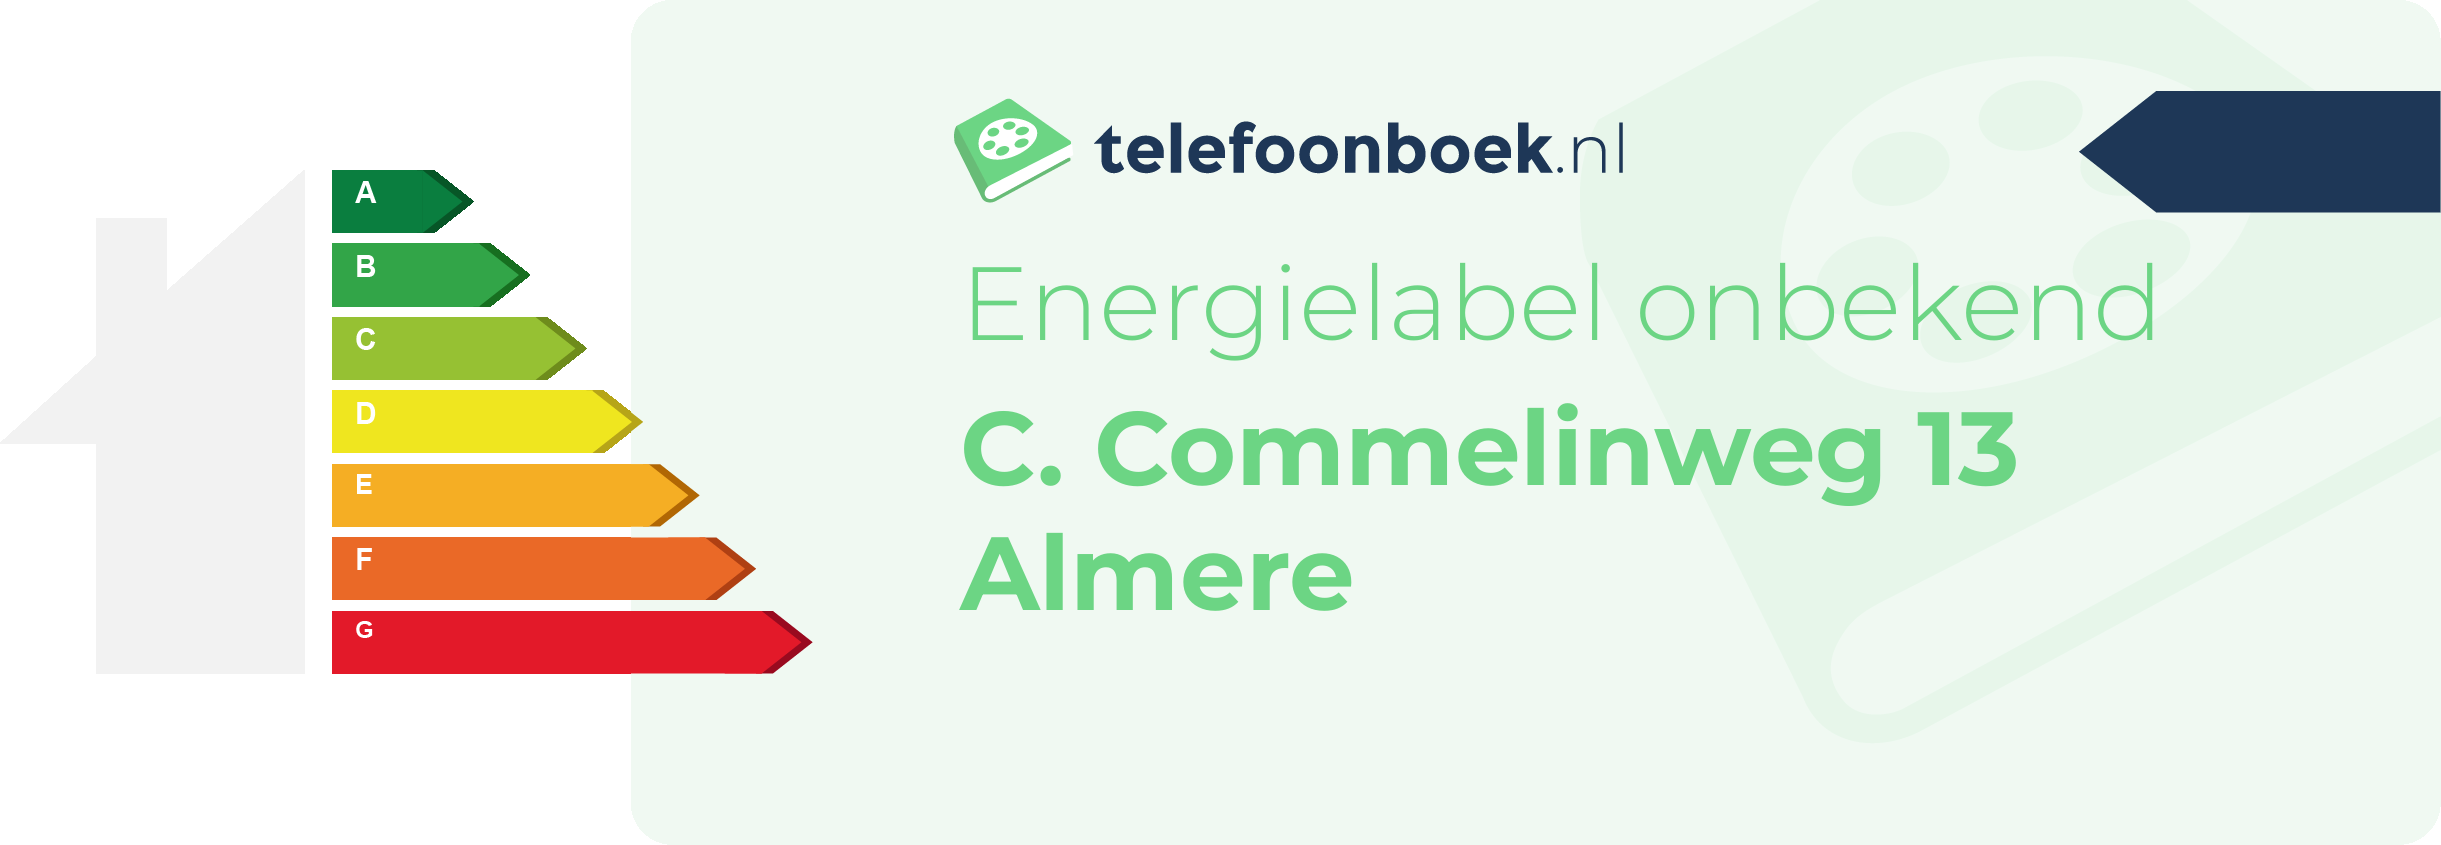 Energielabel C. Commelinweg 13 Almere